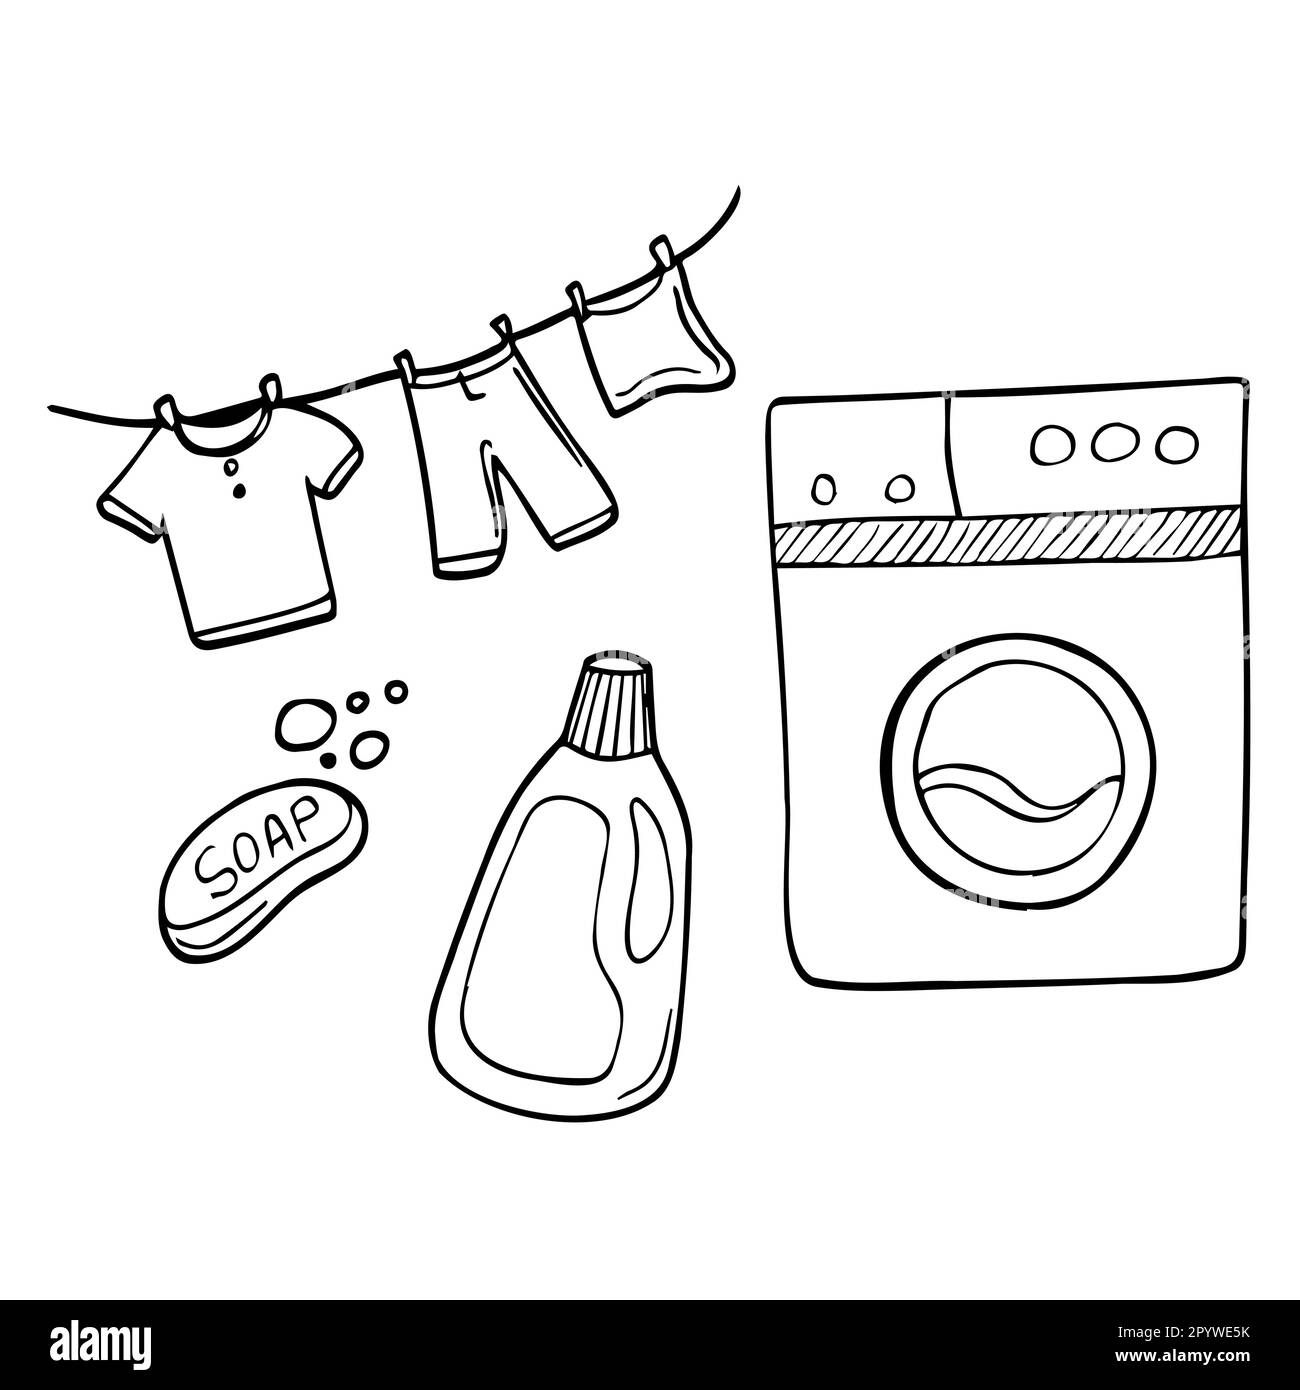 Laundry service hand drawn doodle icons set, vector illustration. Washing, drying and ironing symbols, washing machine, laundry basket, clothes drying Stock Vector